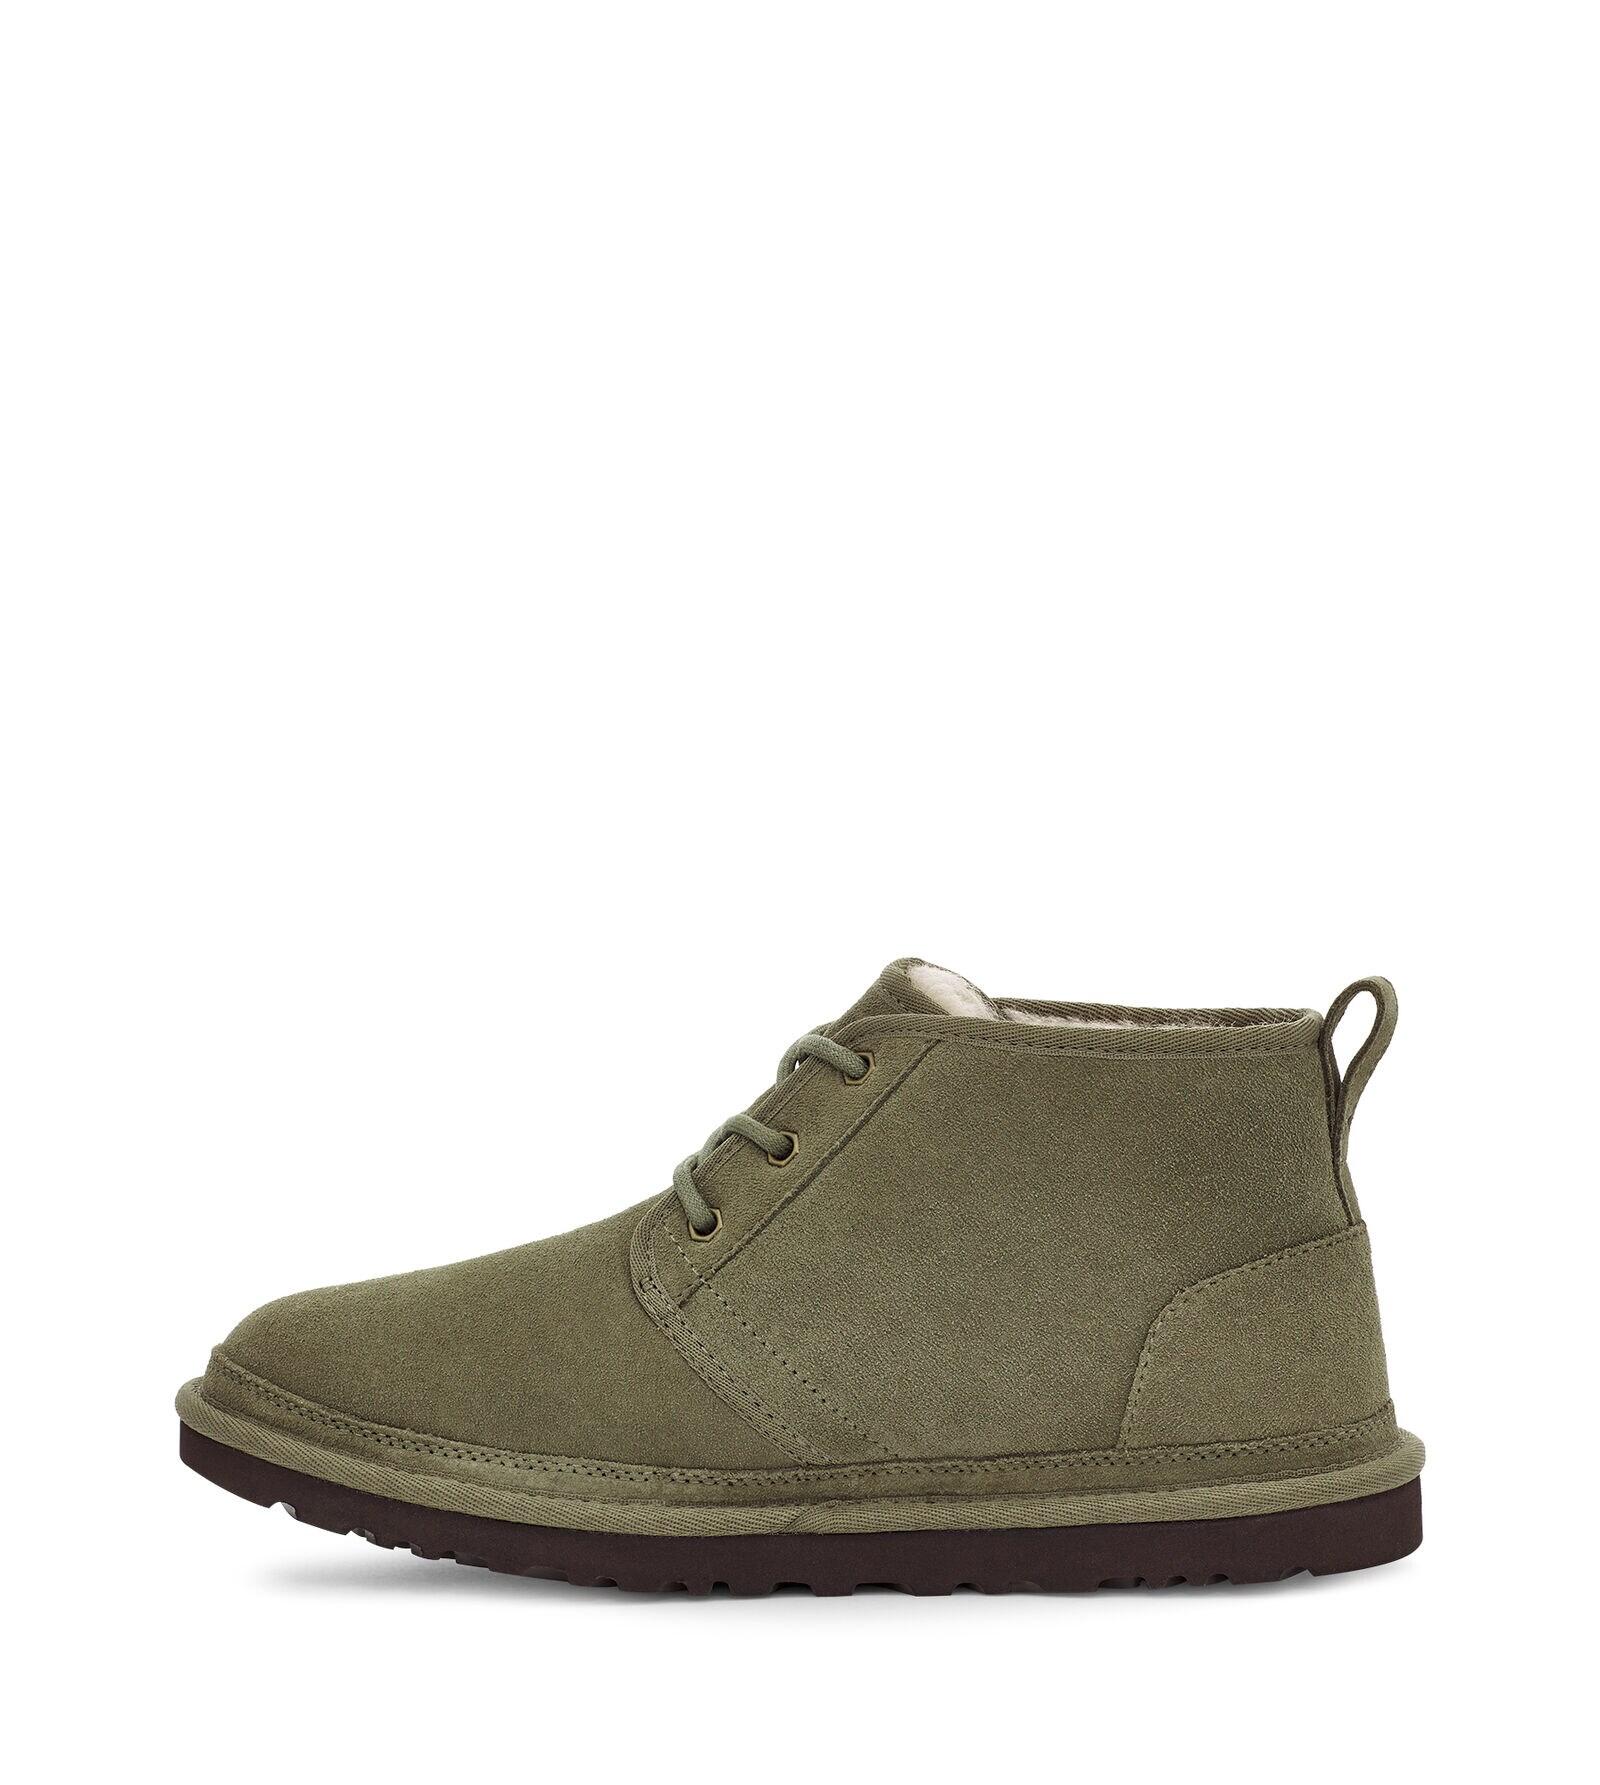 UGG Neumel Boot Wool in Burnt Olive (Green) for Men - Lyst